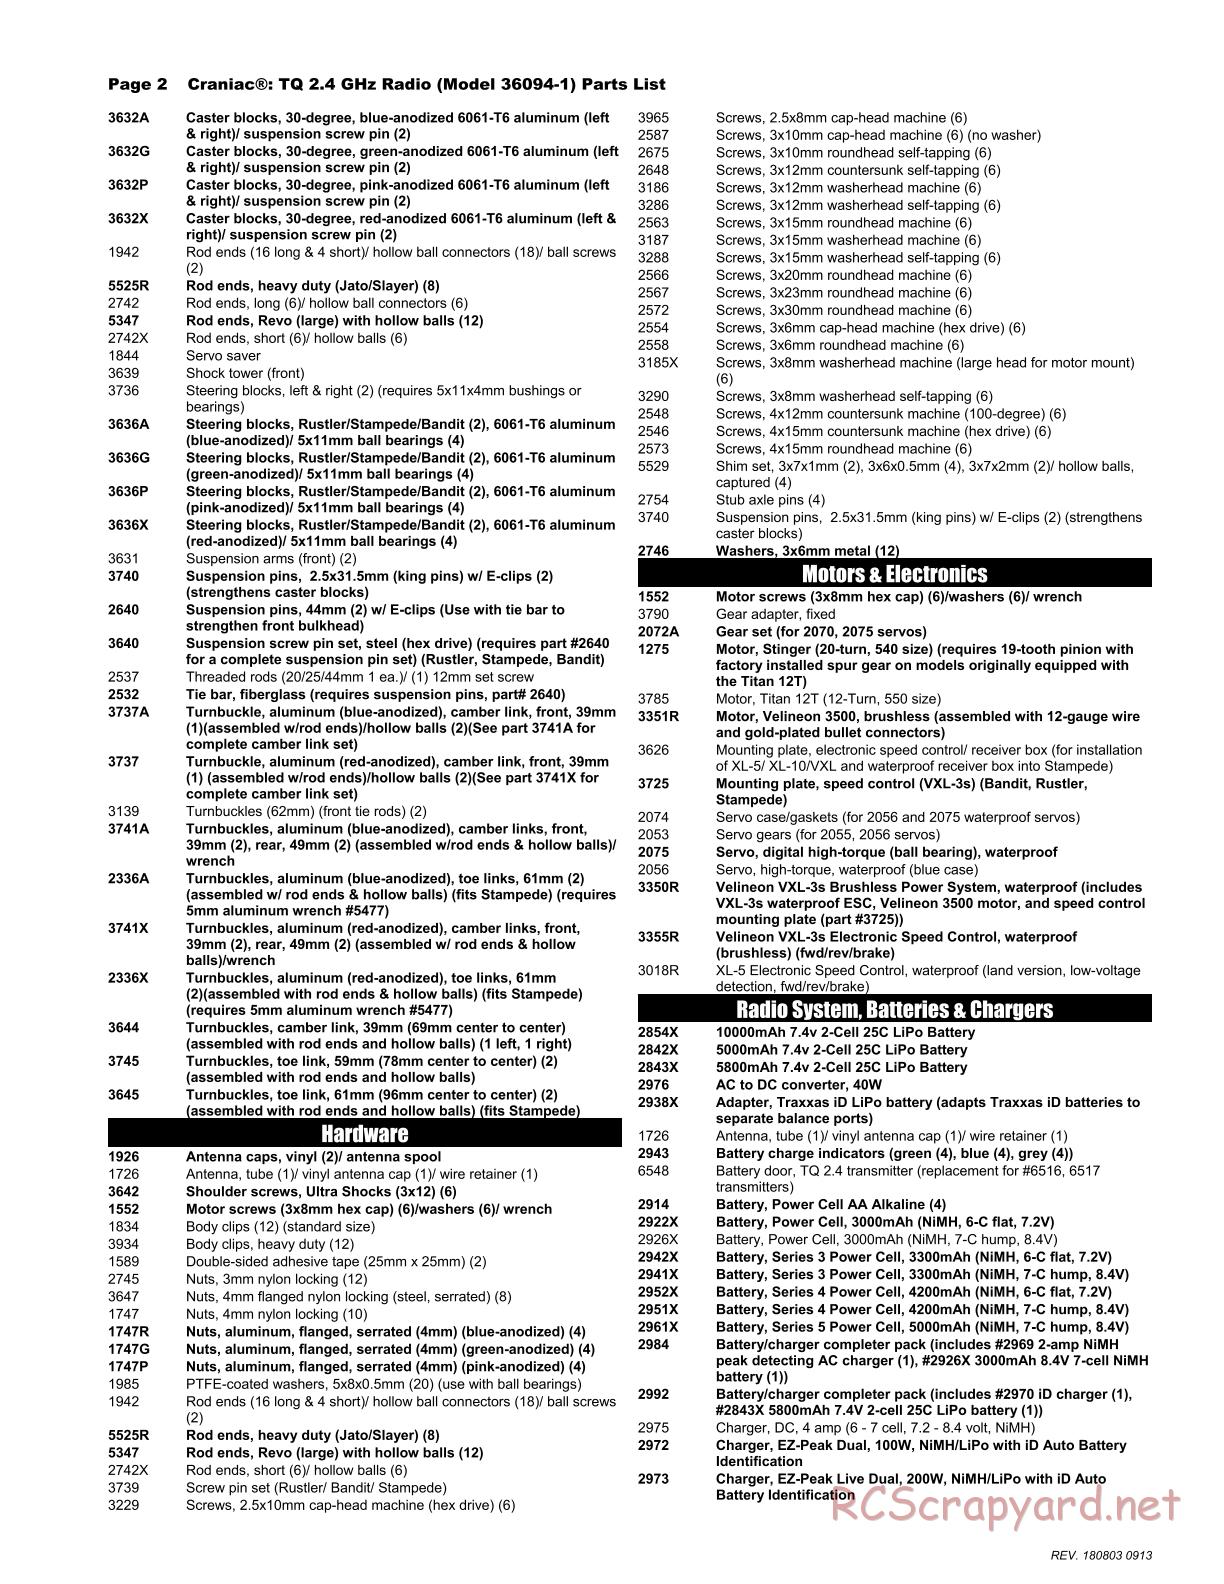 Traxxas - Craniac - Parts List - Page 2